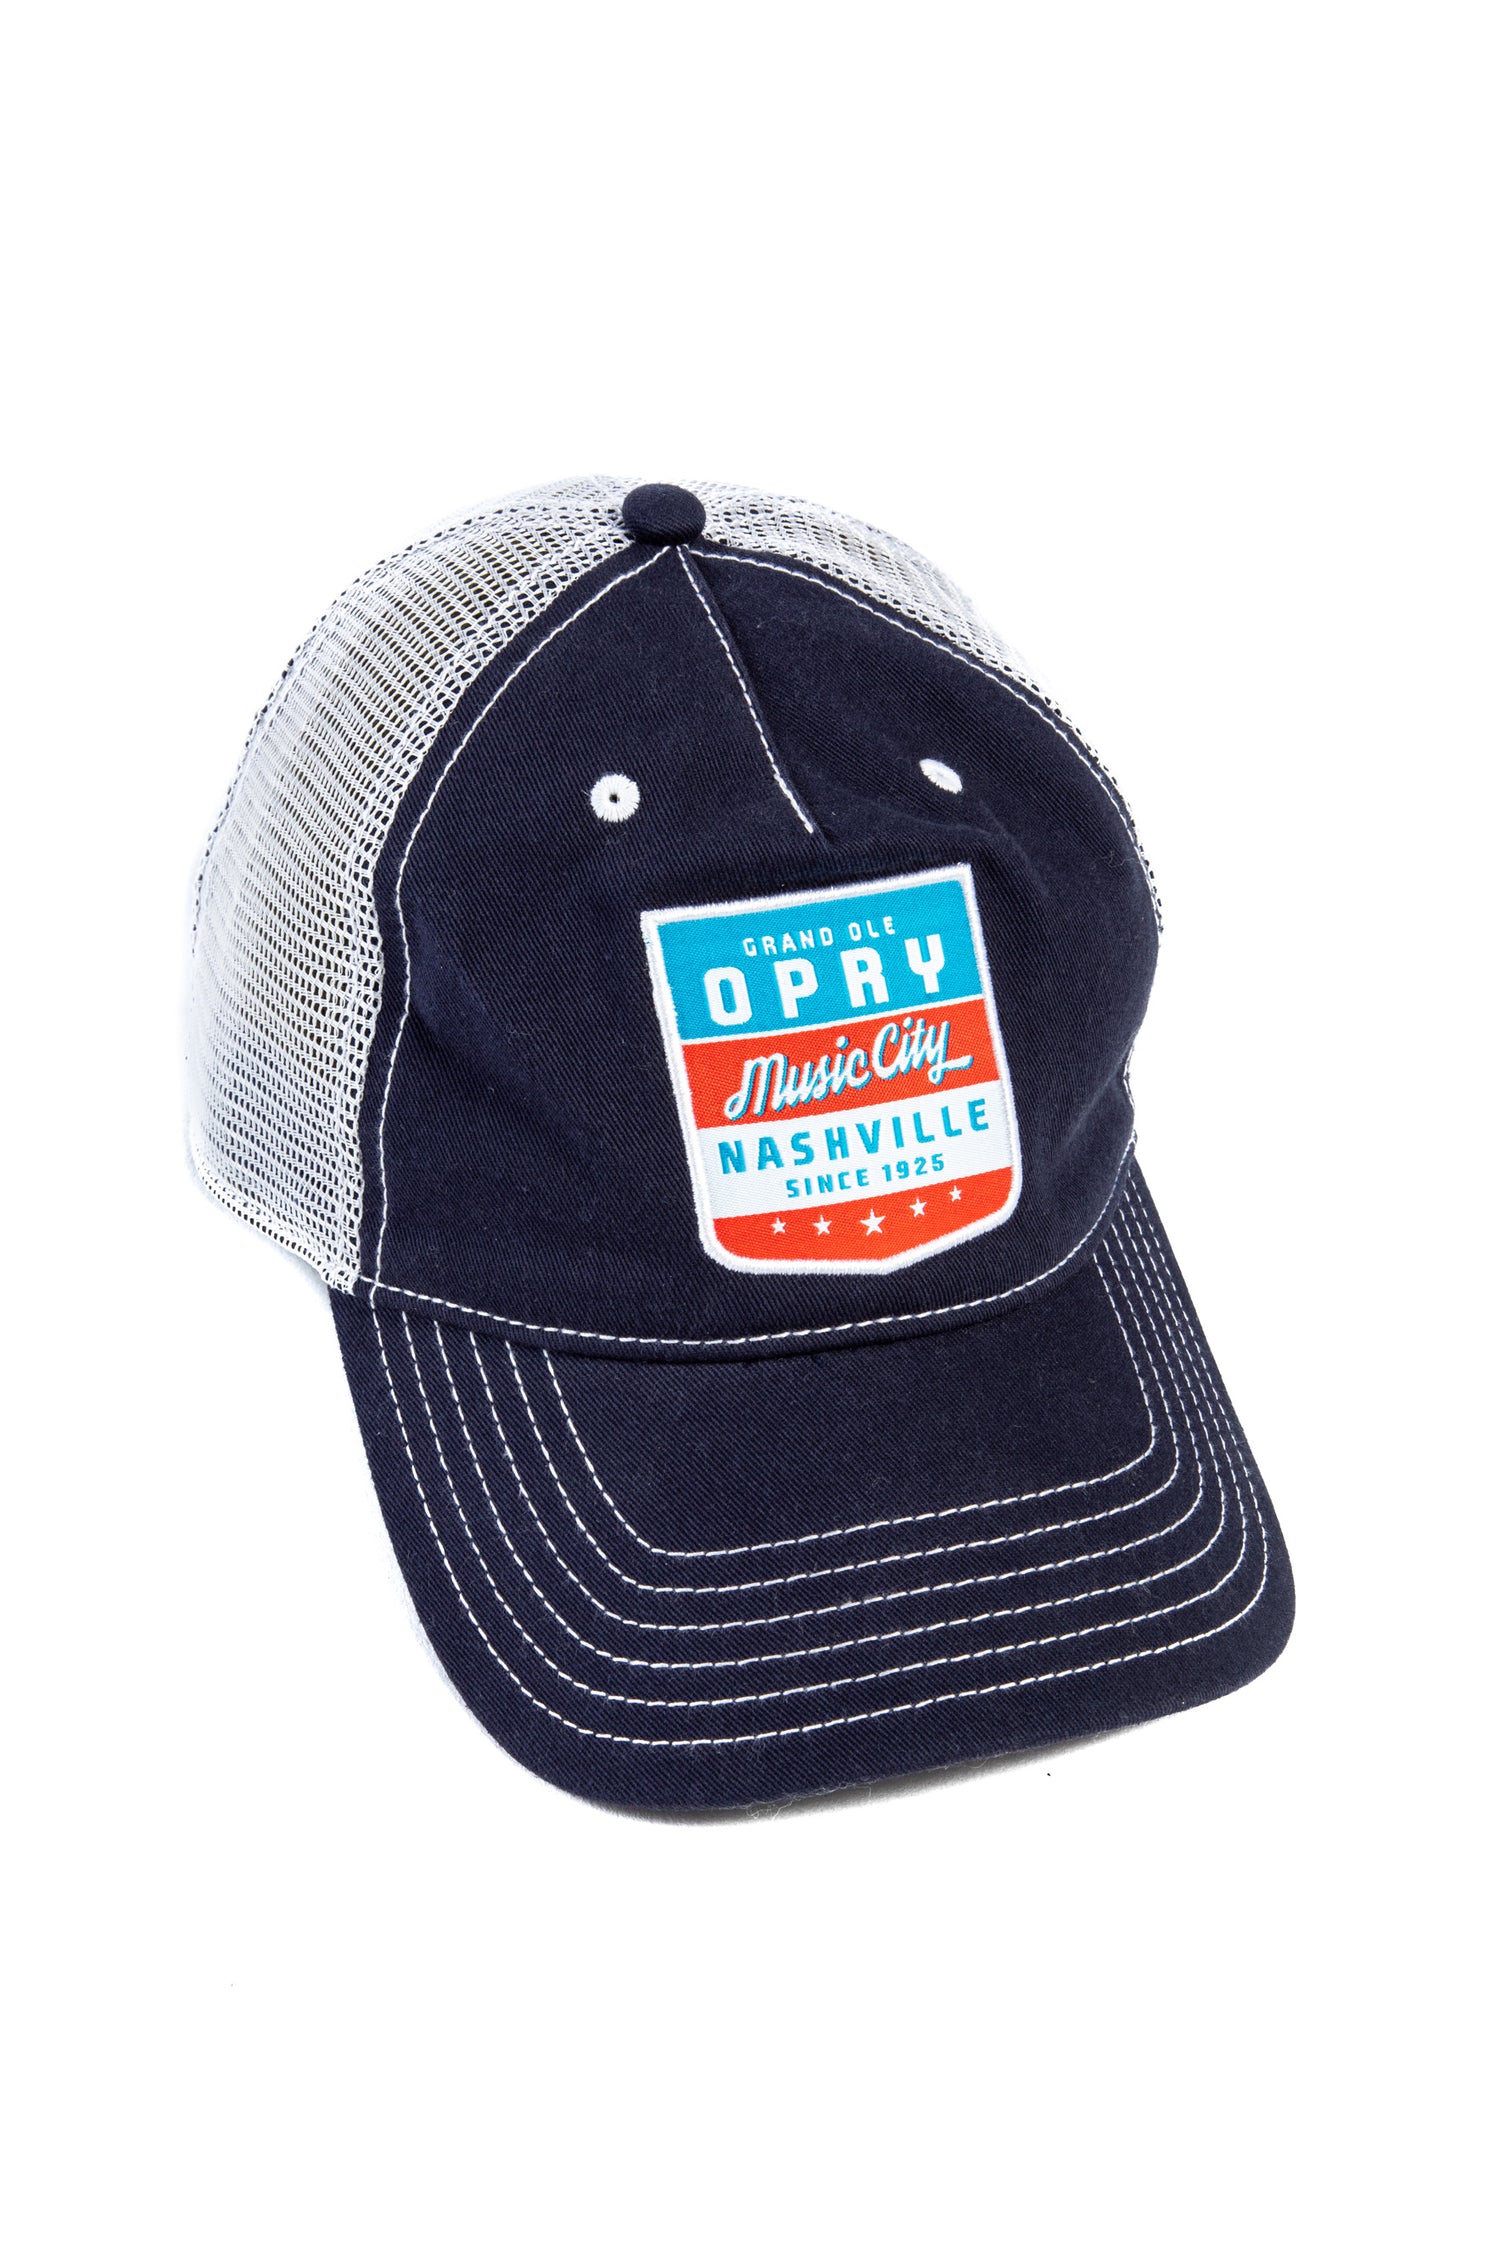 Opry Music City Shield Trucker Hat